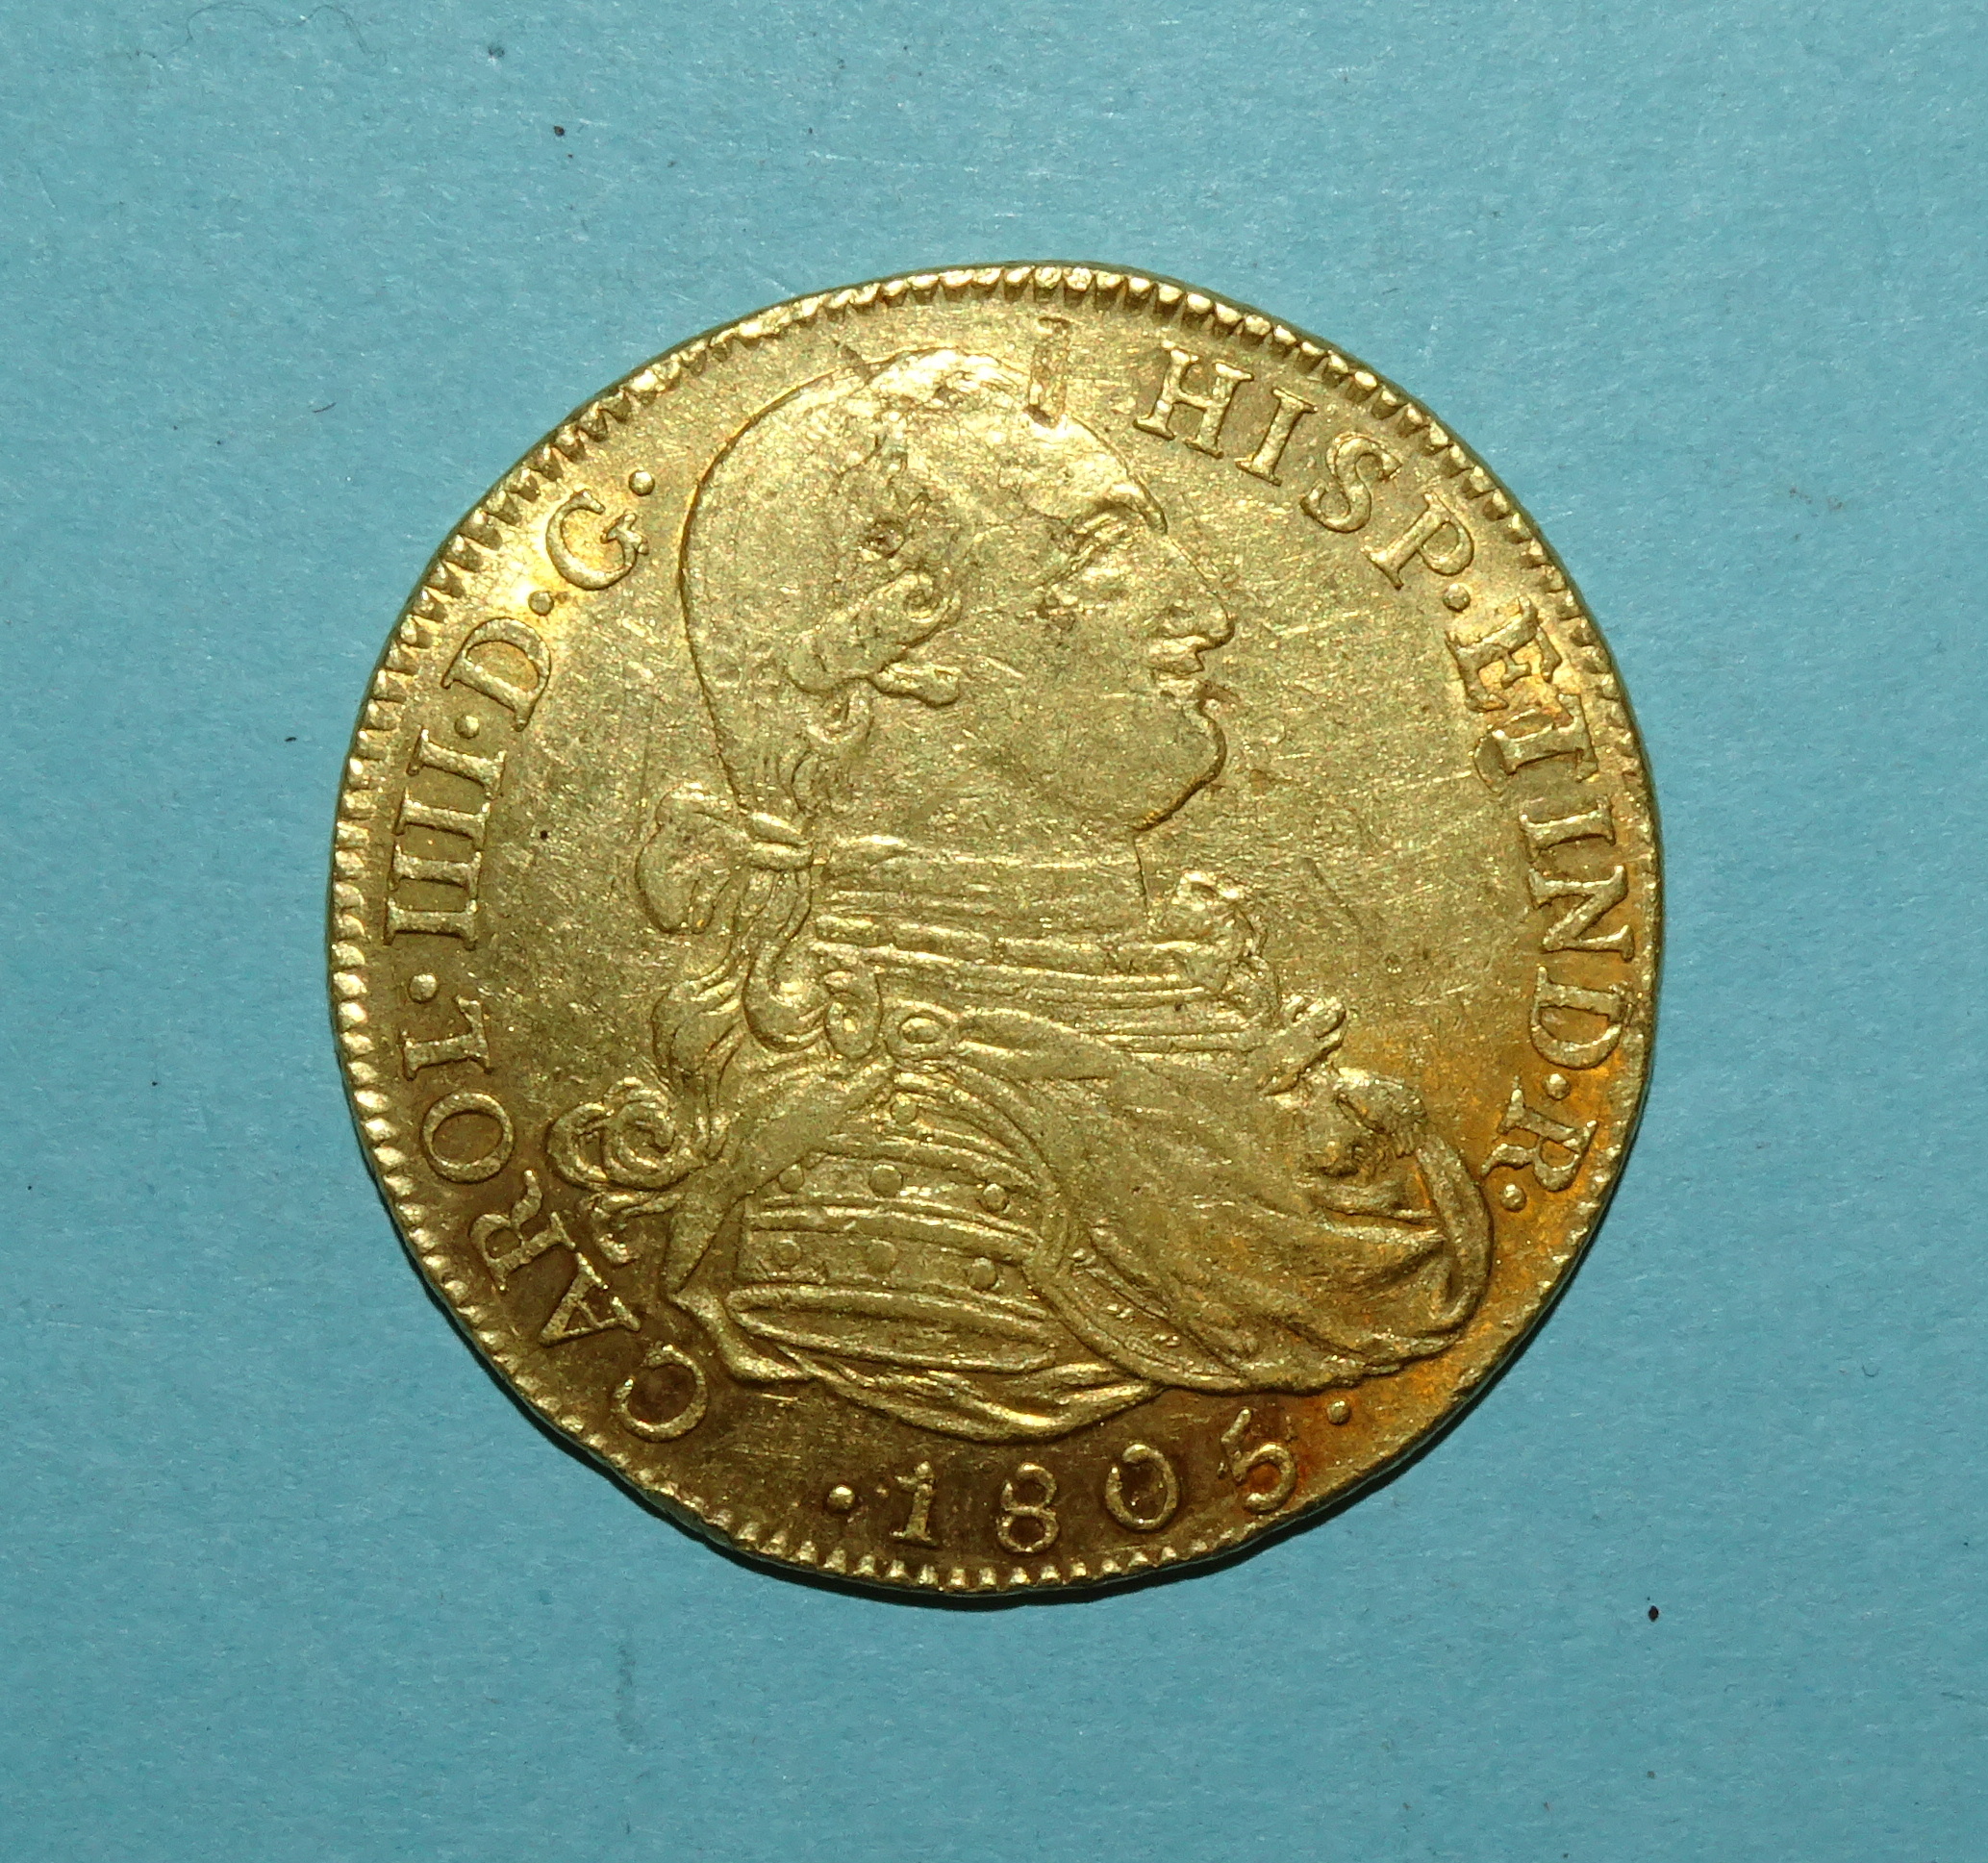 Columbia Charles IV gold 8-escudos 1805, Bogota Mint, 36mm diameter, 27g.